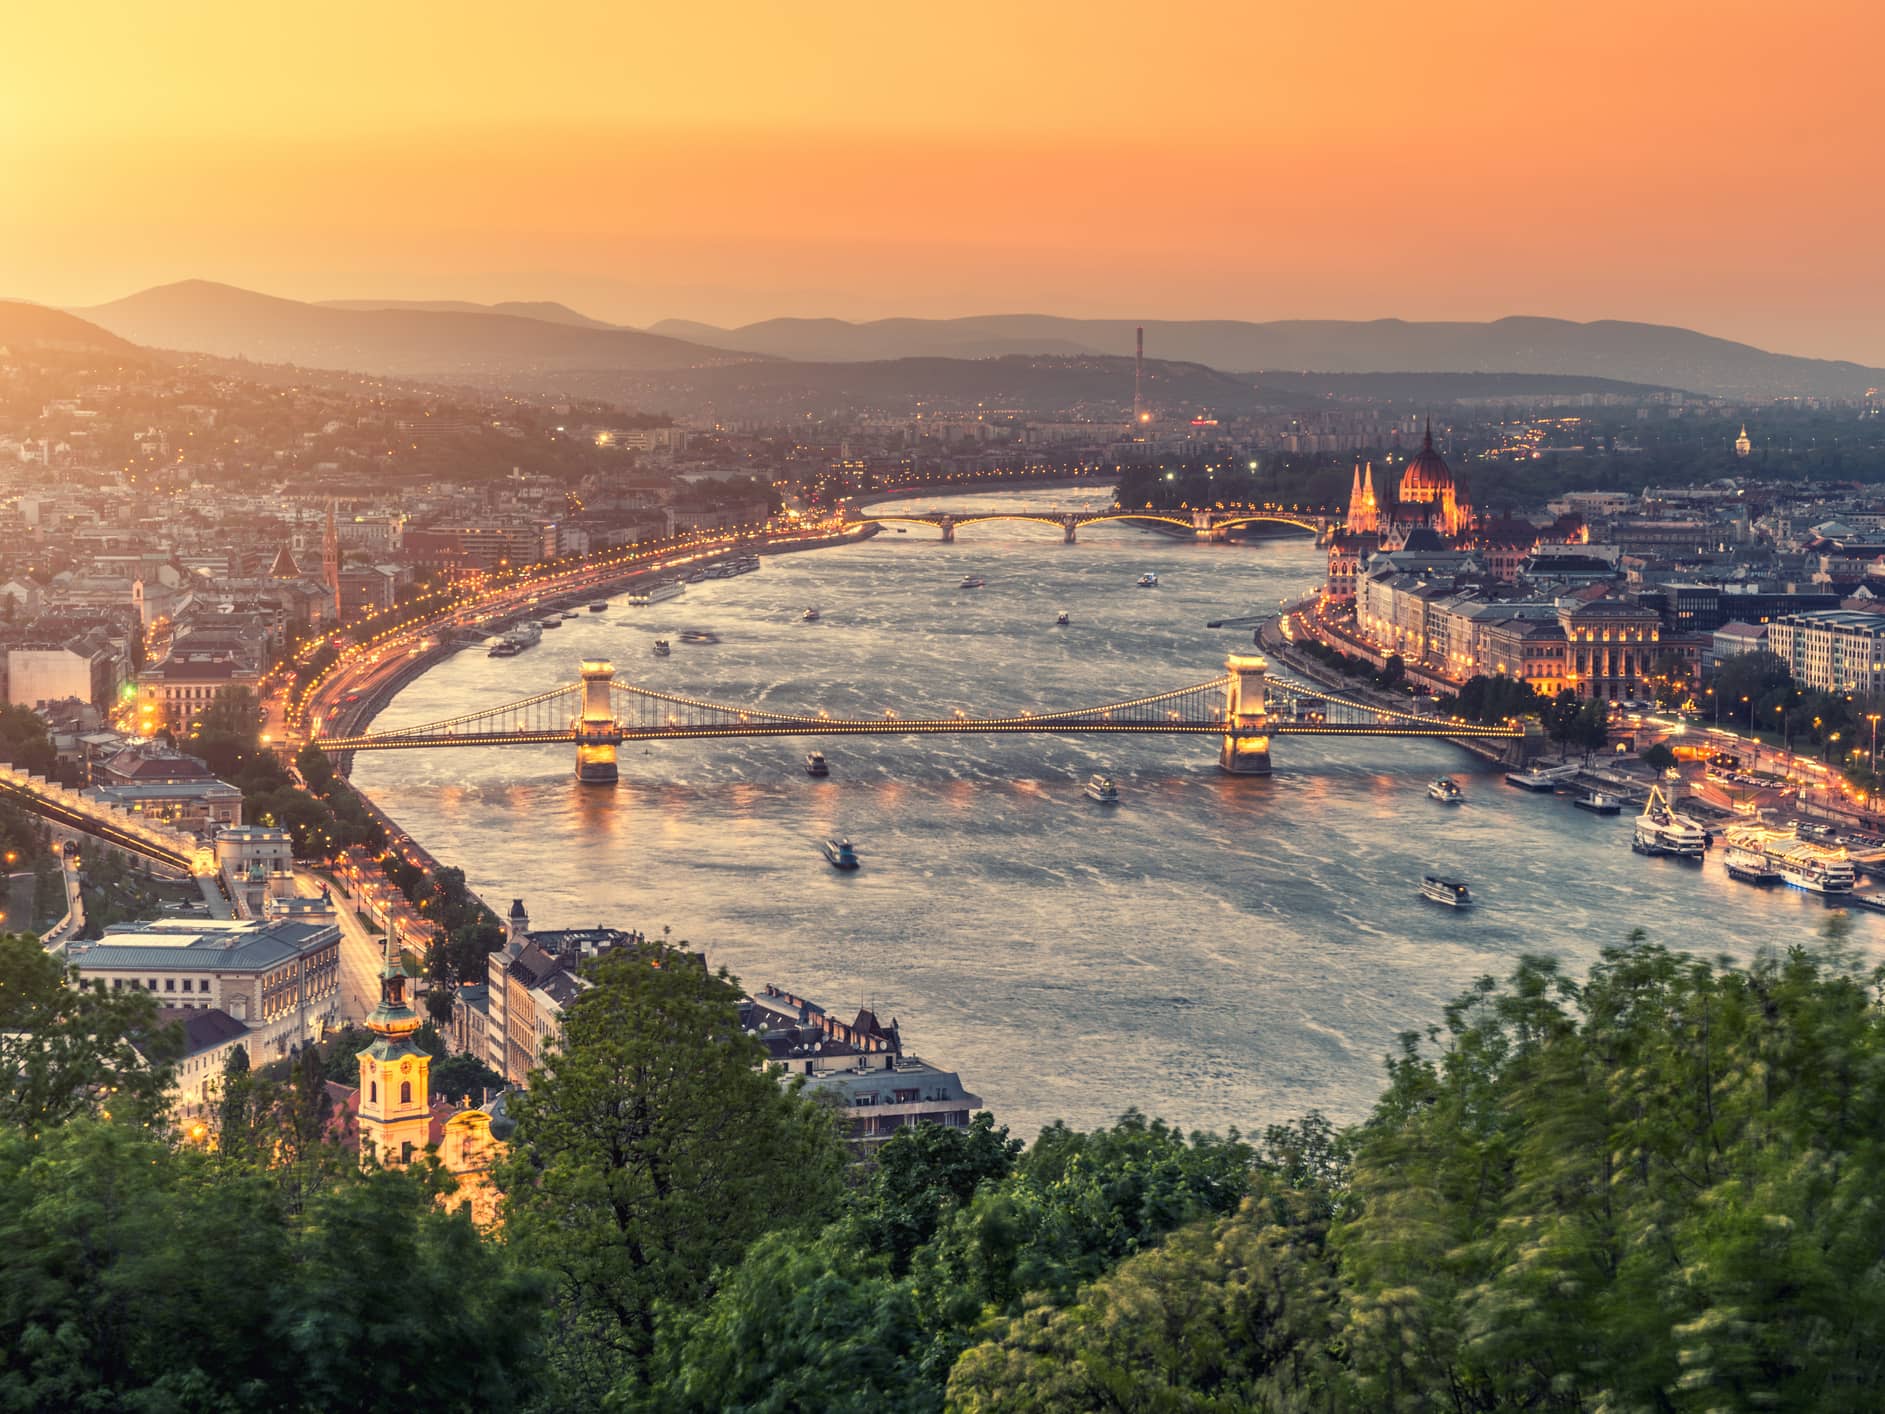  Sail down the Danube River at sunset  